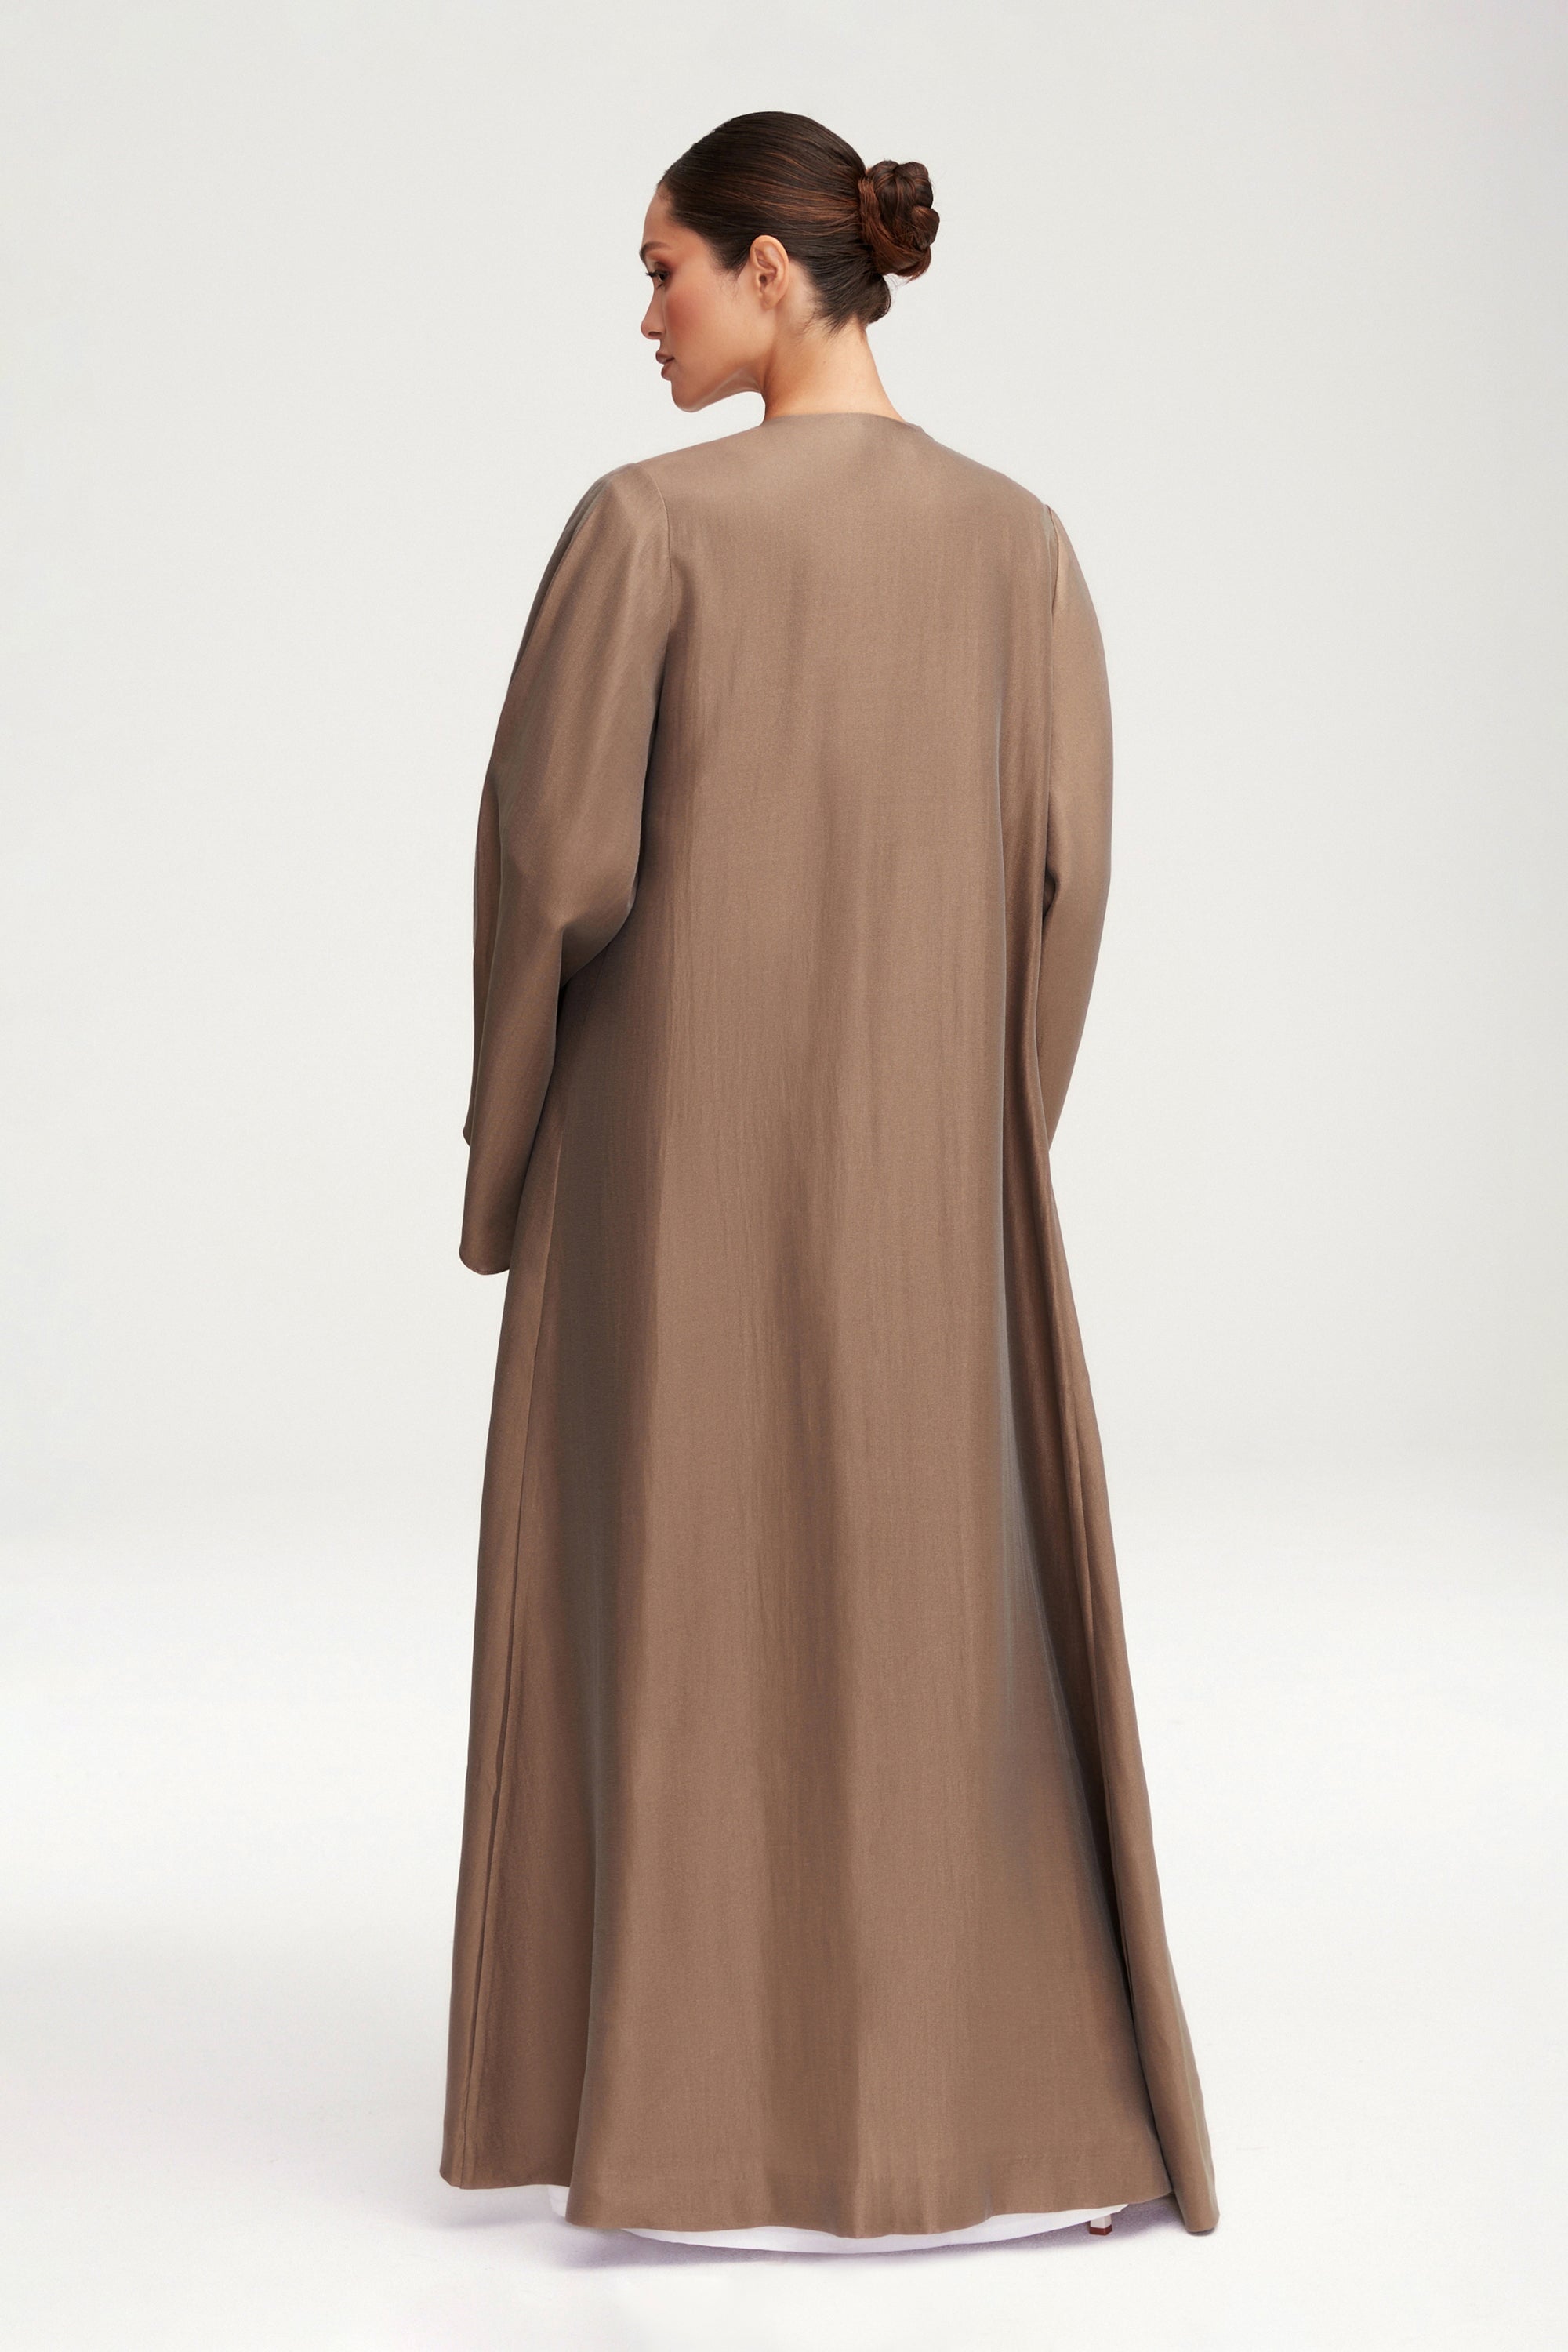 Seema Flare Sleeve Open Abaya - Taupe Clothing epschoolboard 